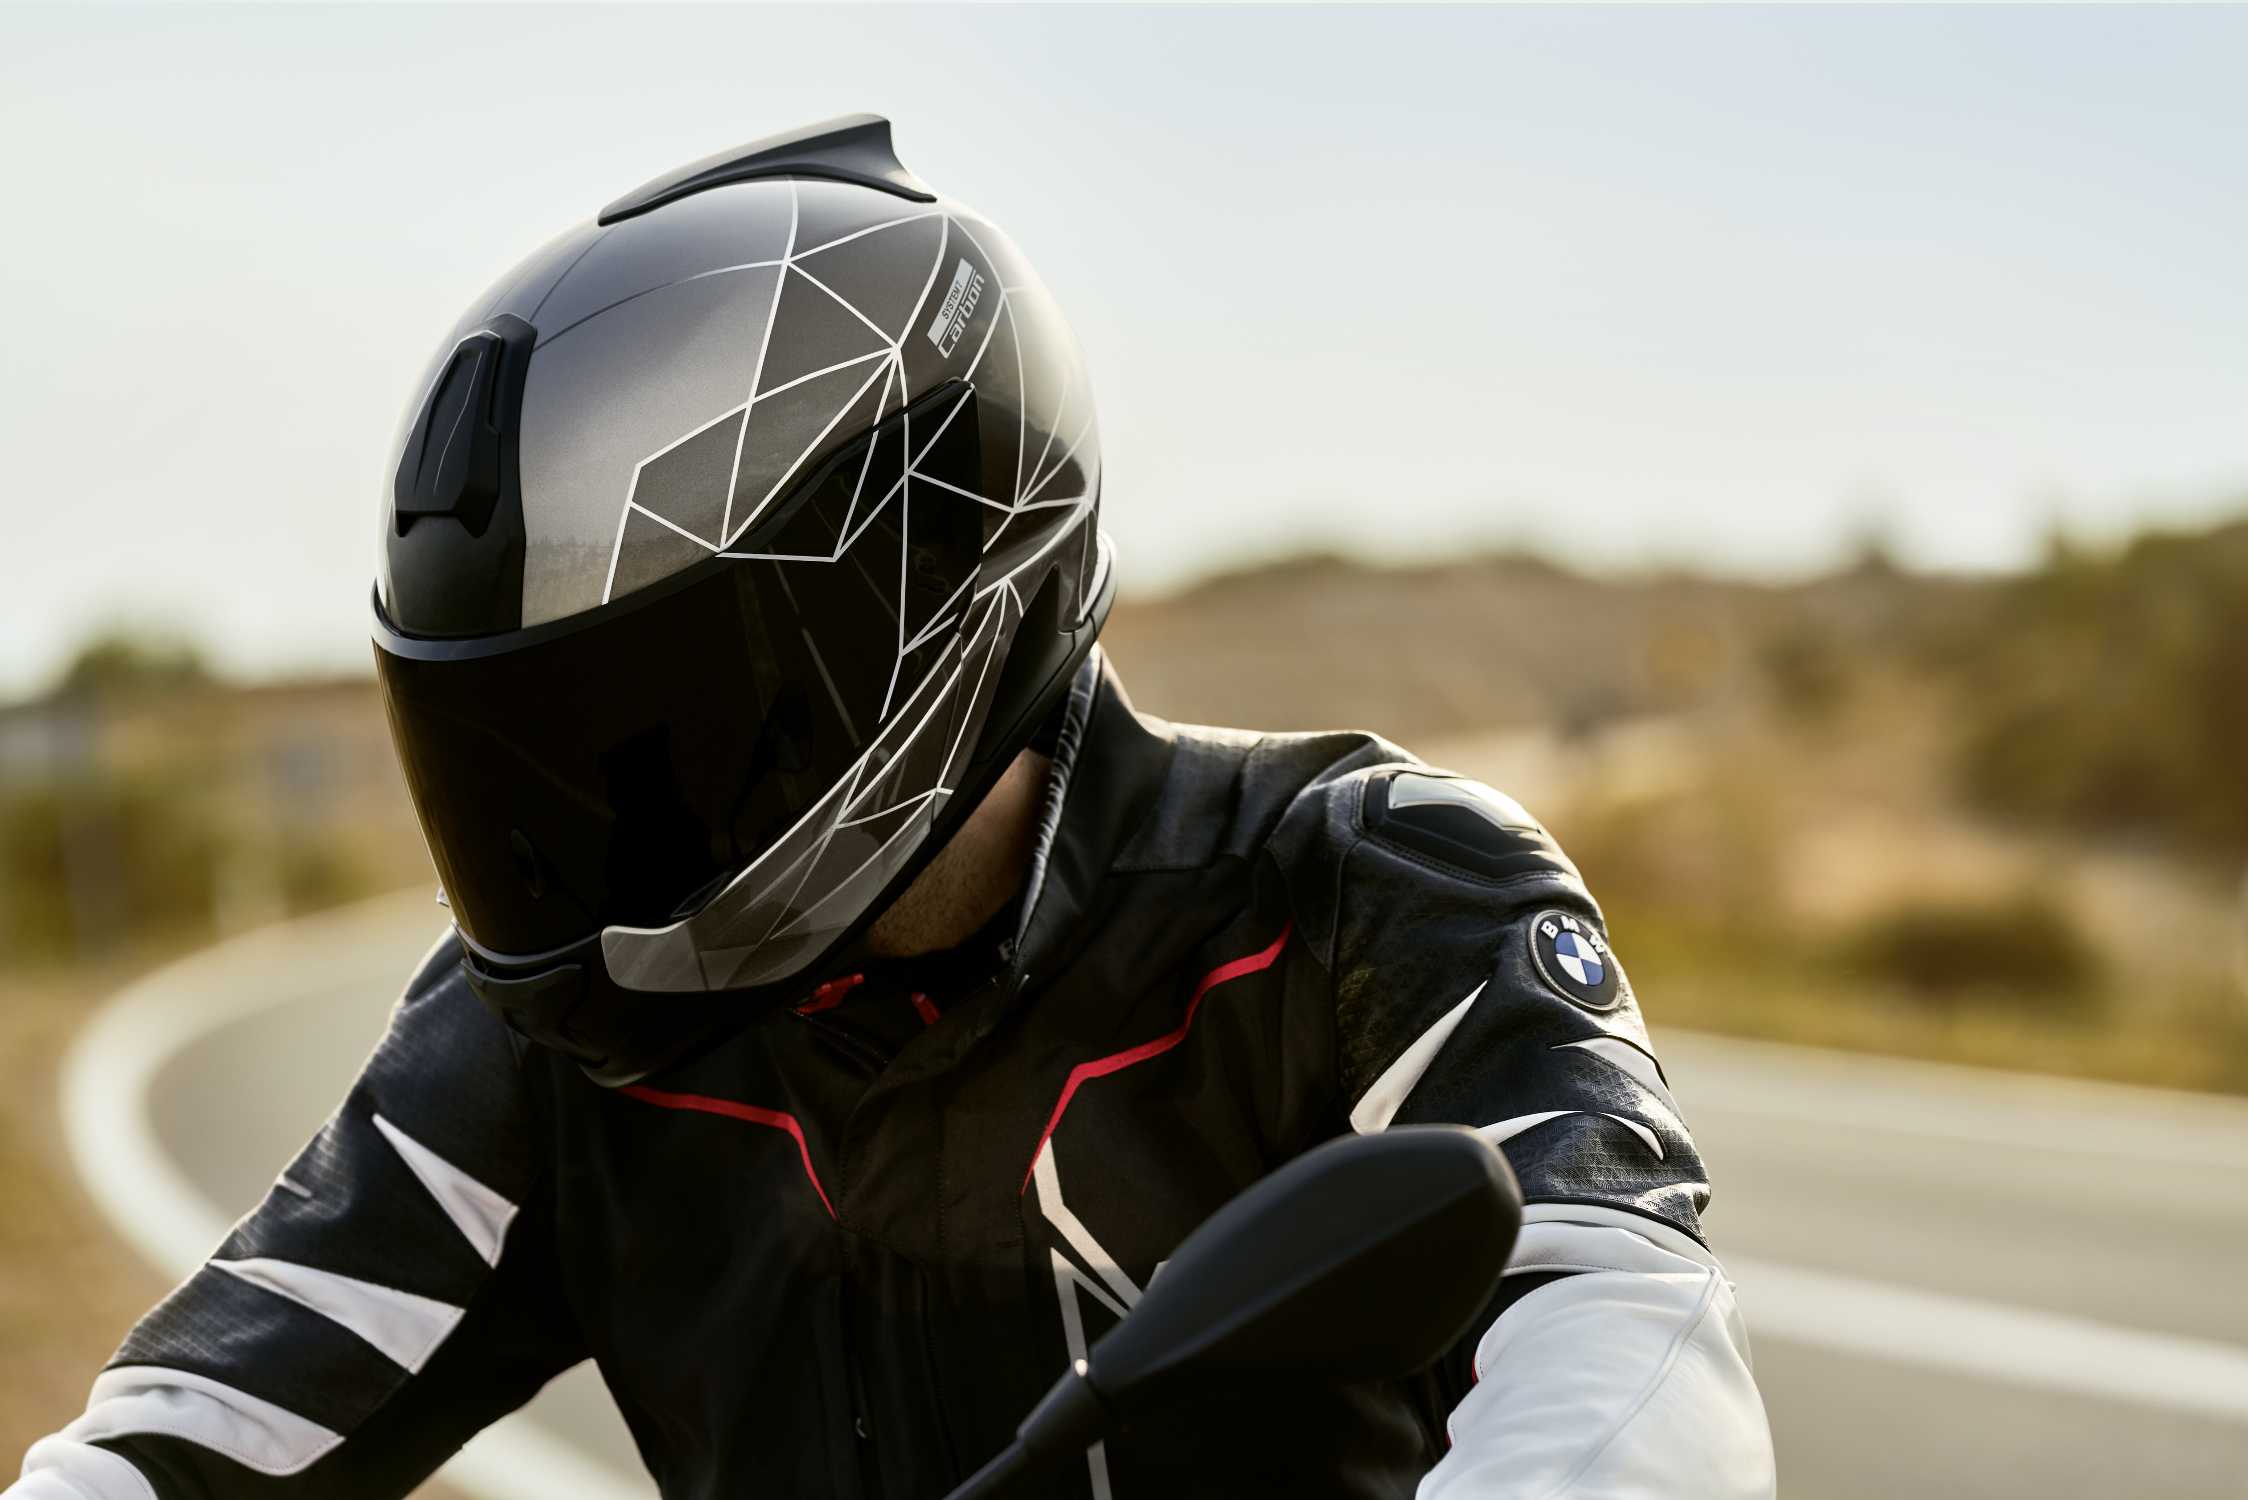 BMW Motorrad Ride & Style Kollektion 2020. Helmet System 7 Carbon Option 719. Jacket XRide Pro